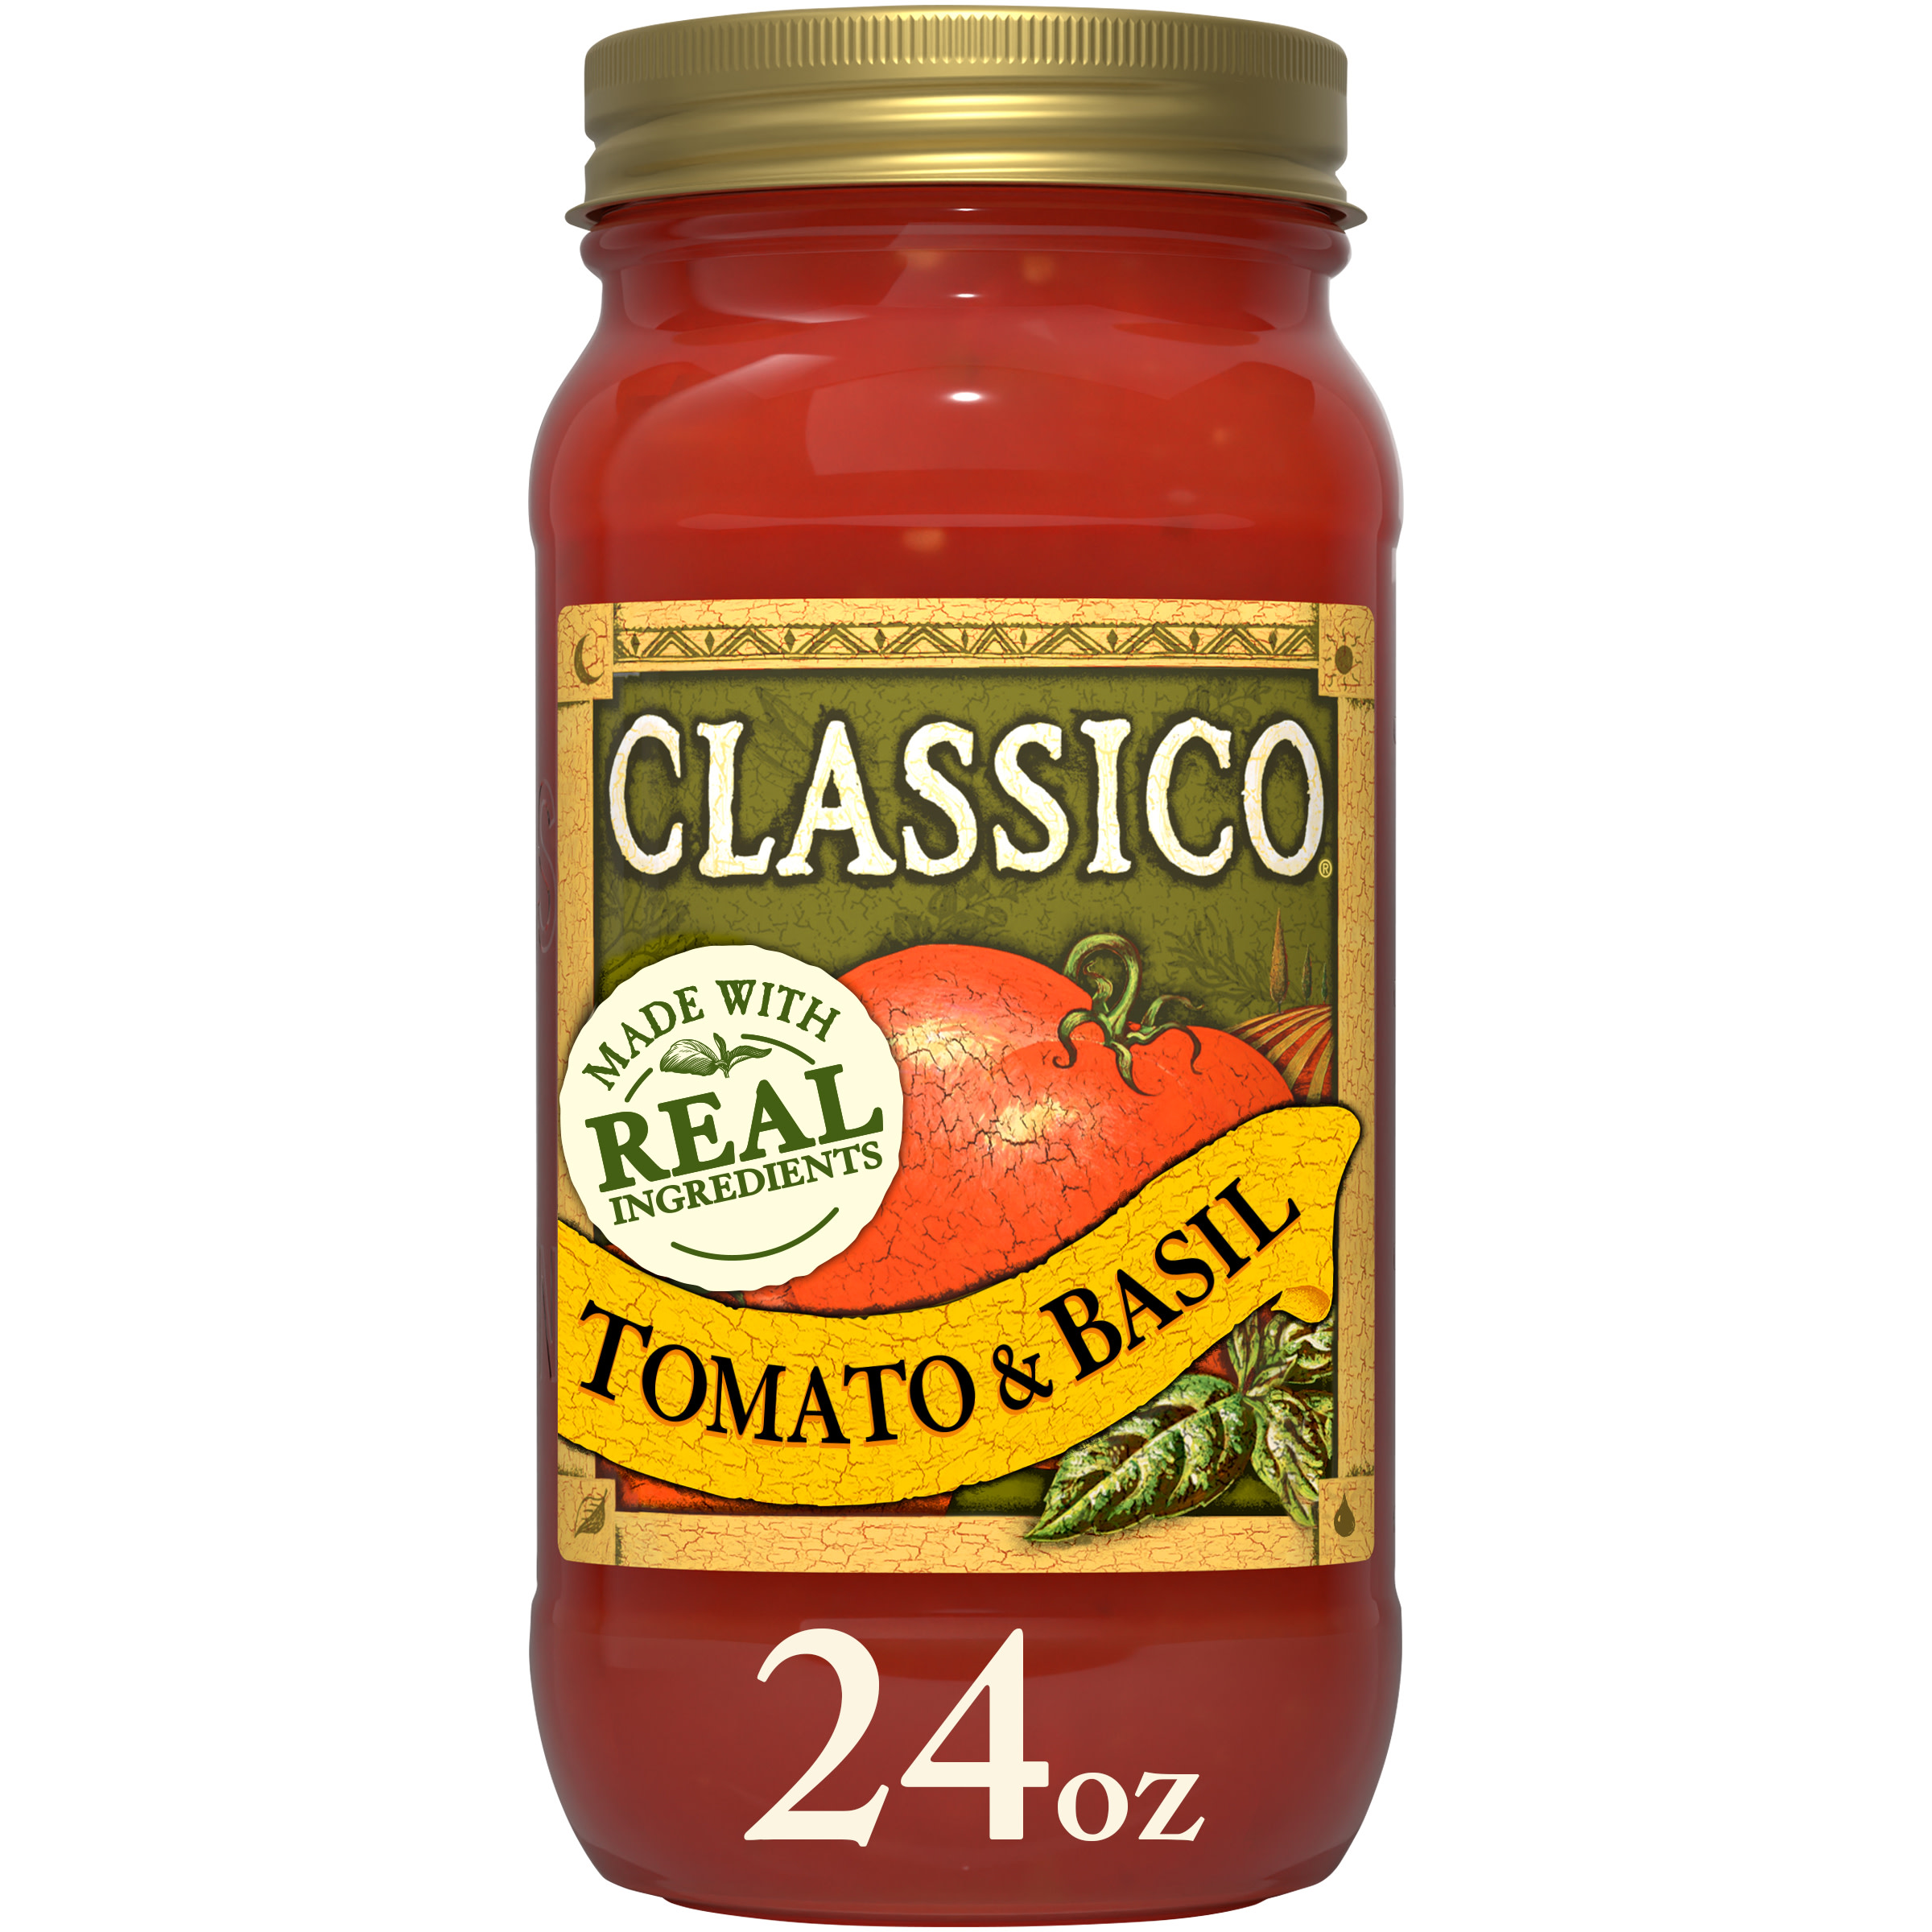 Classico Tomato & Basil Spaghetti Pasta Sauce, 24 oz. Jar - image 1 of 18